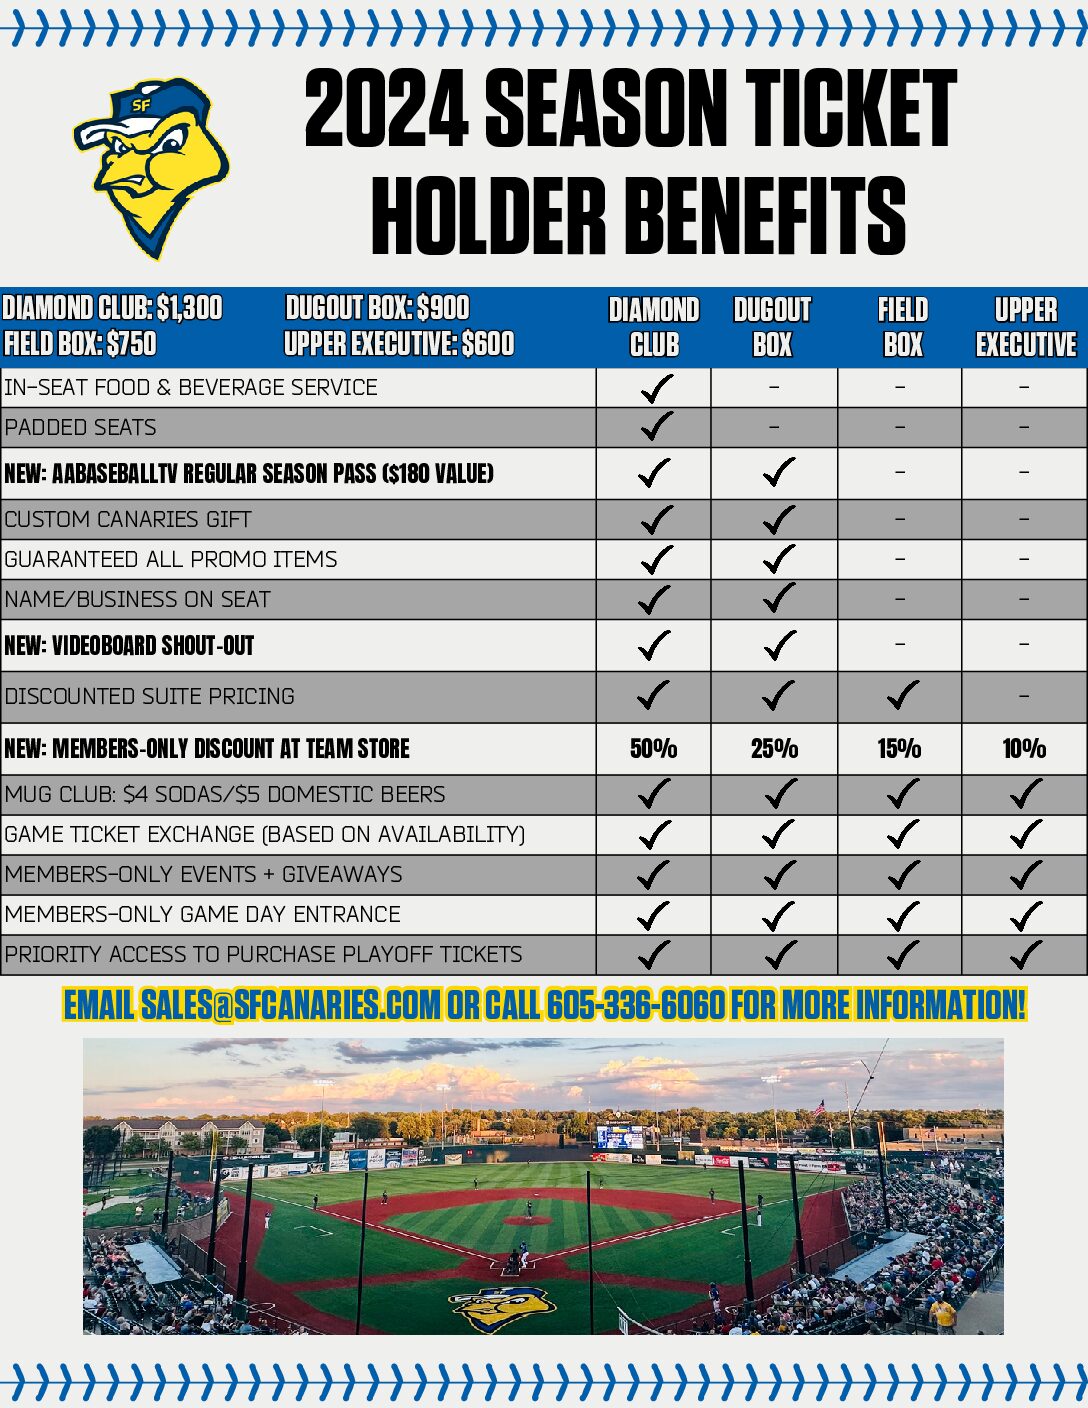 Season Ticket Member Benefits